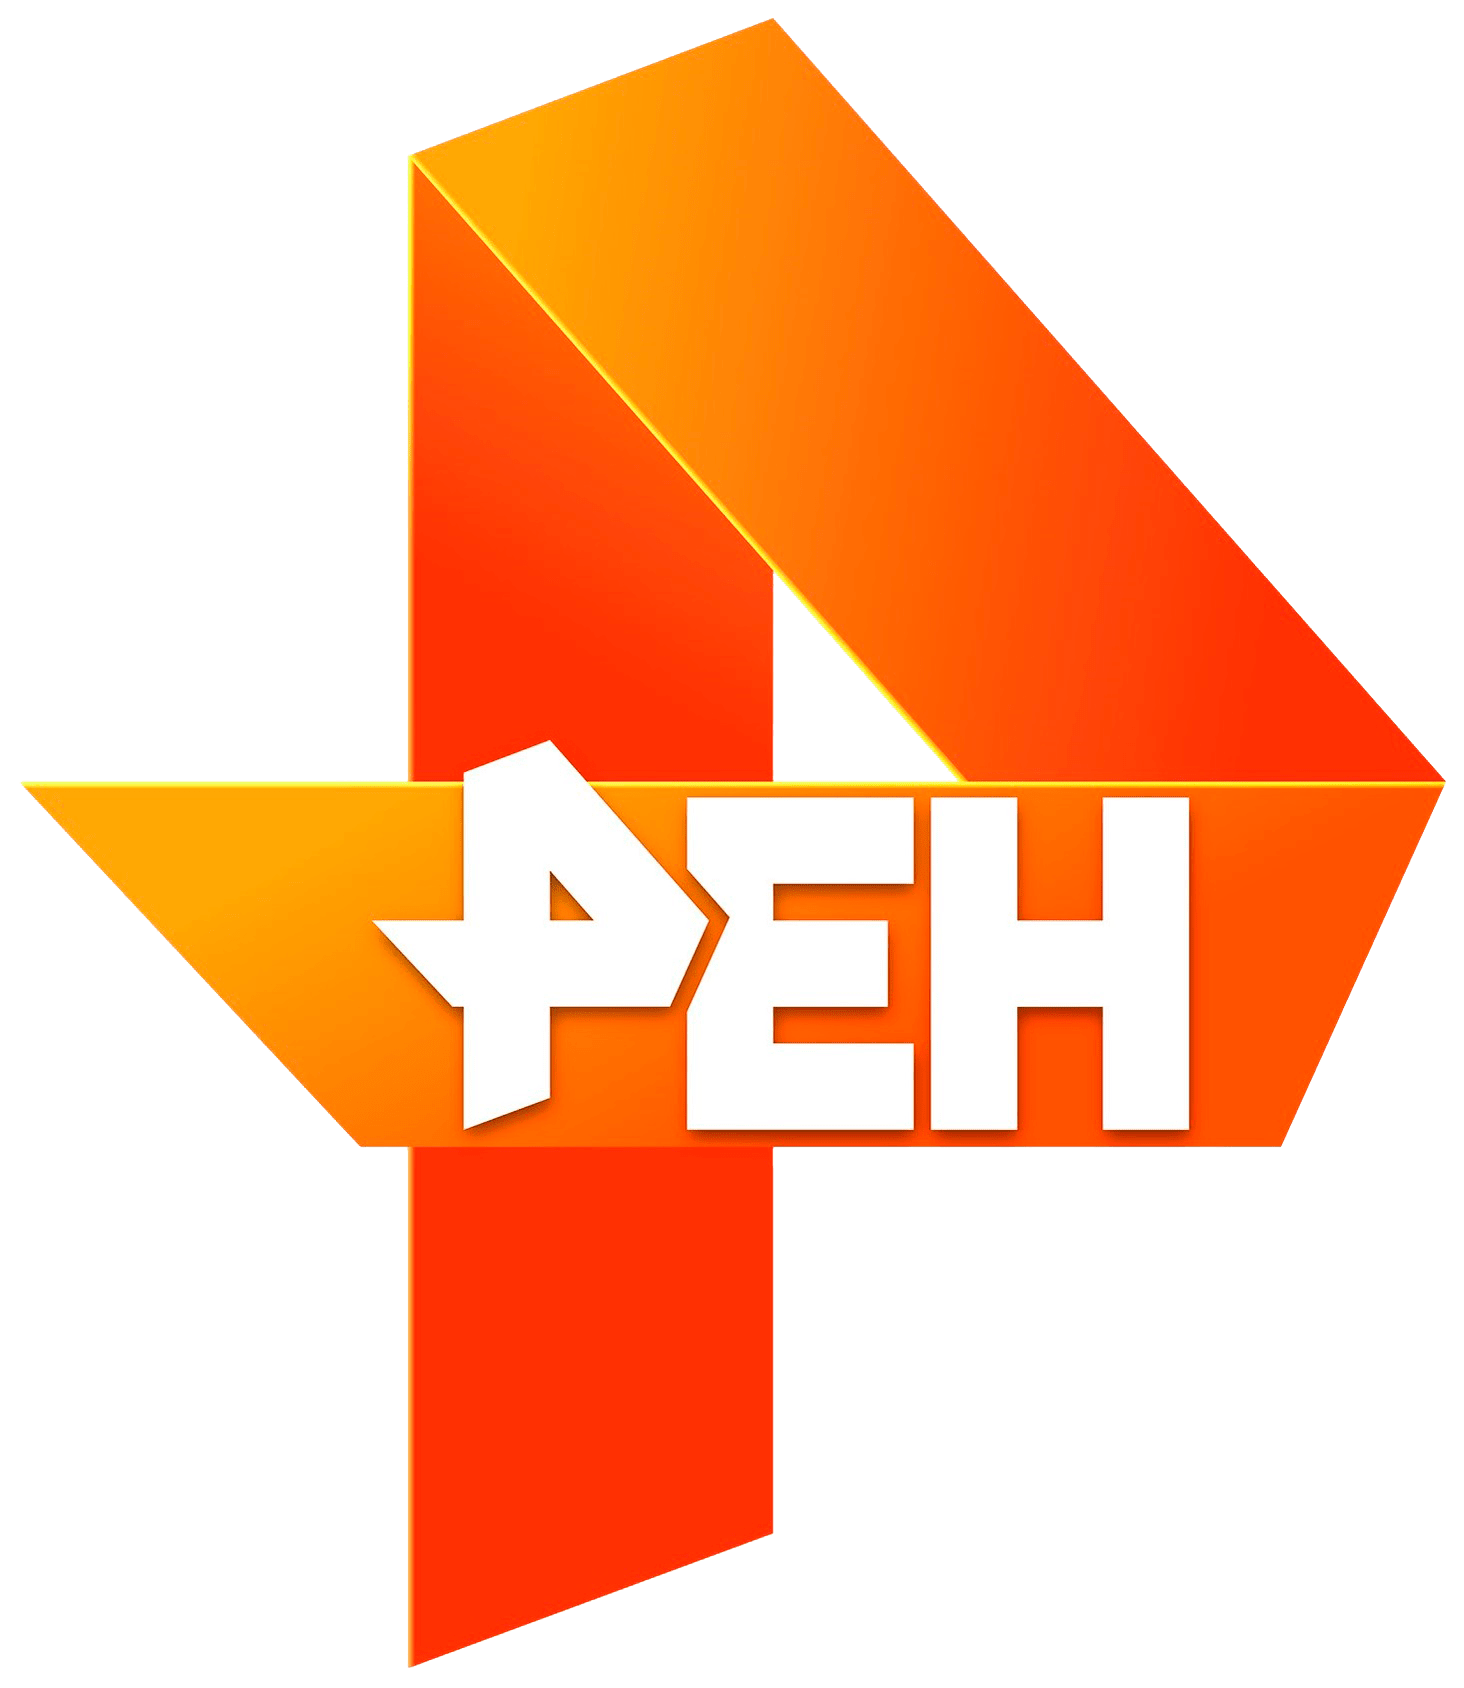 Раземщение рекламы РЕН ТВ, г. Томск